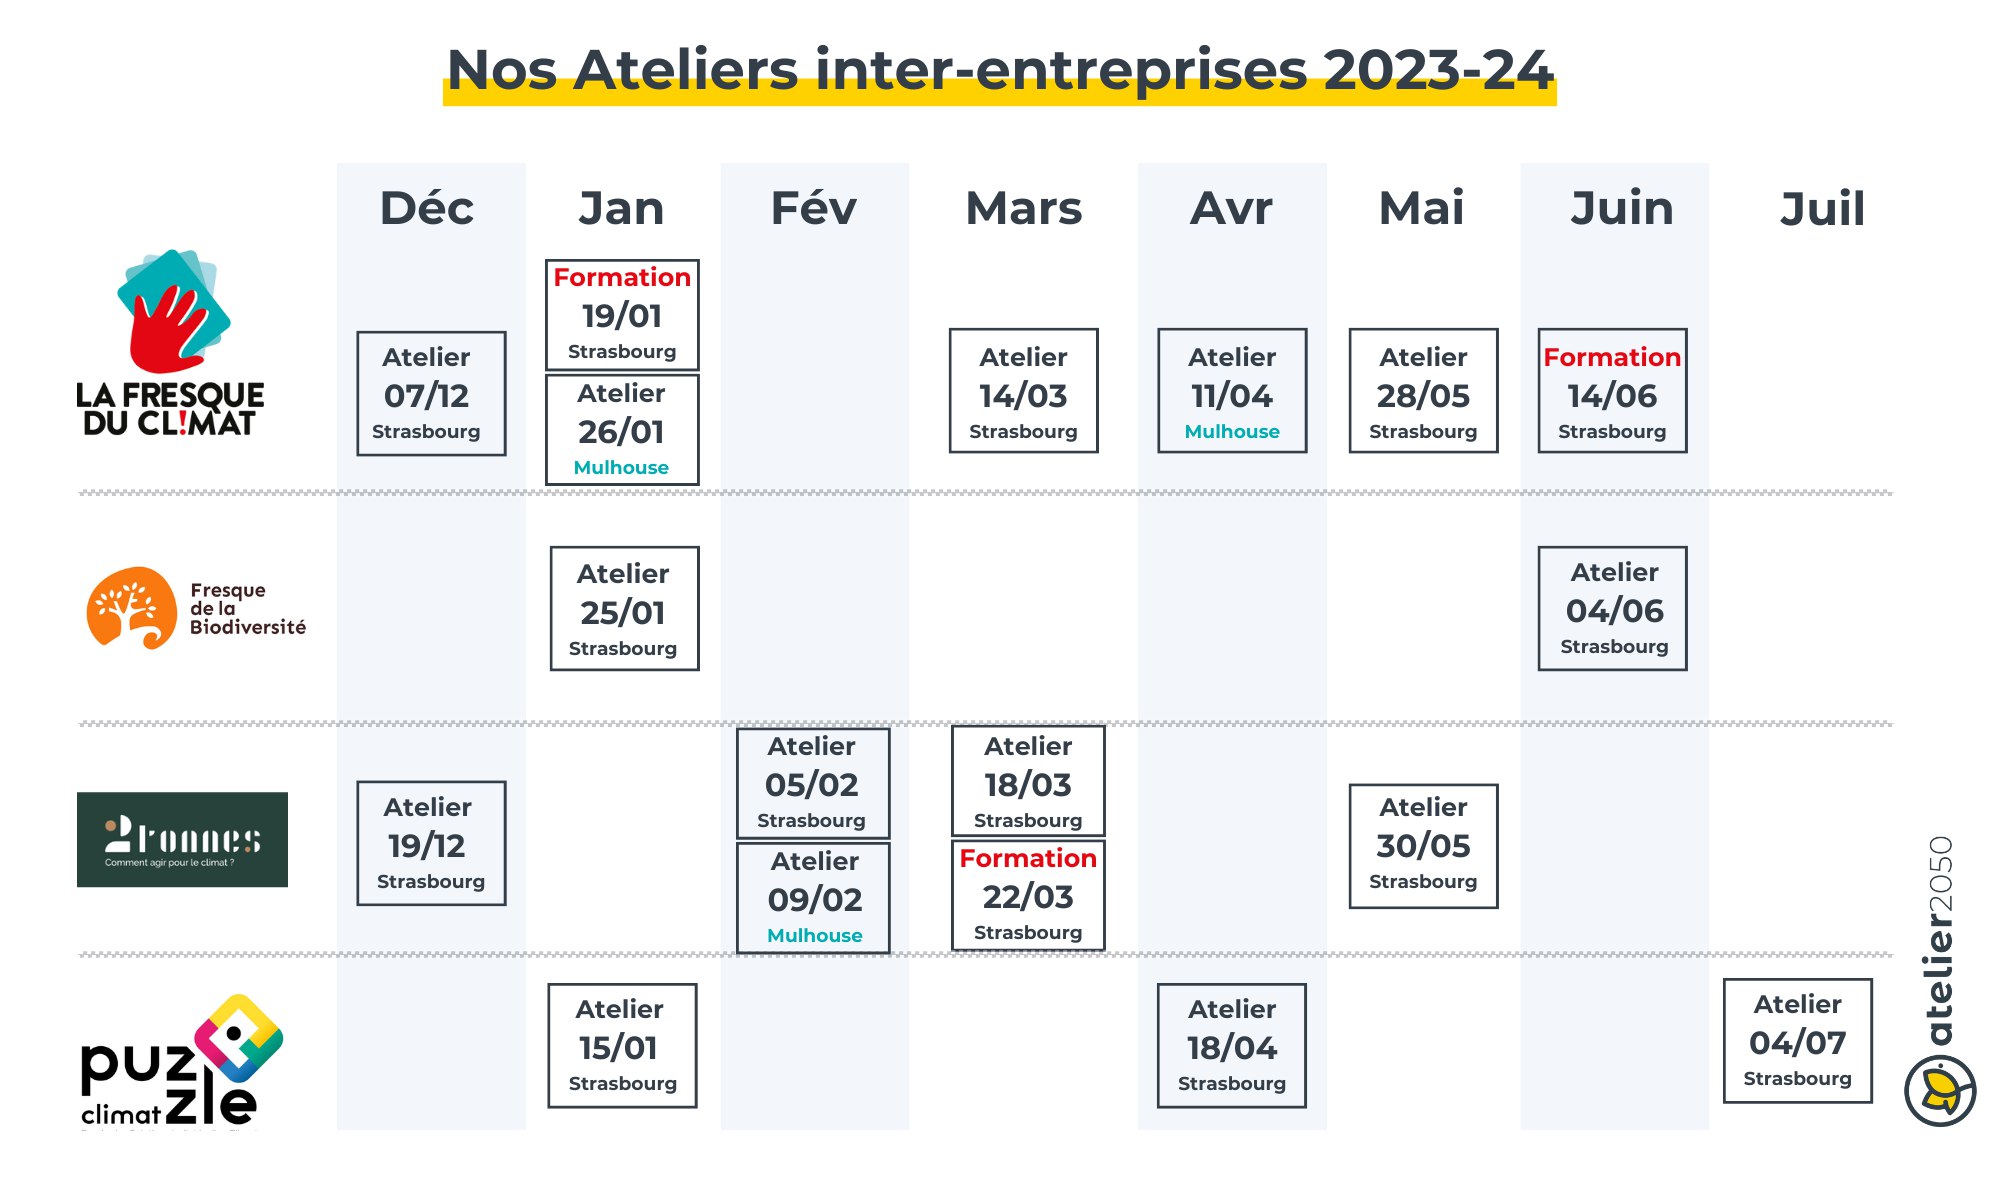 Ateliers inter-entreprises Atelier 2050